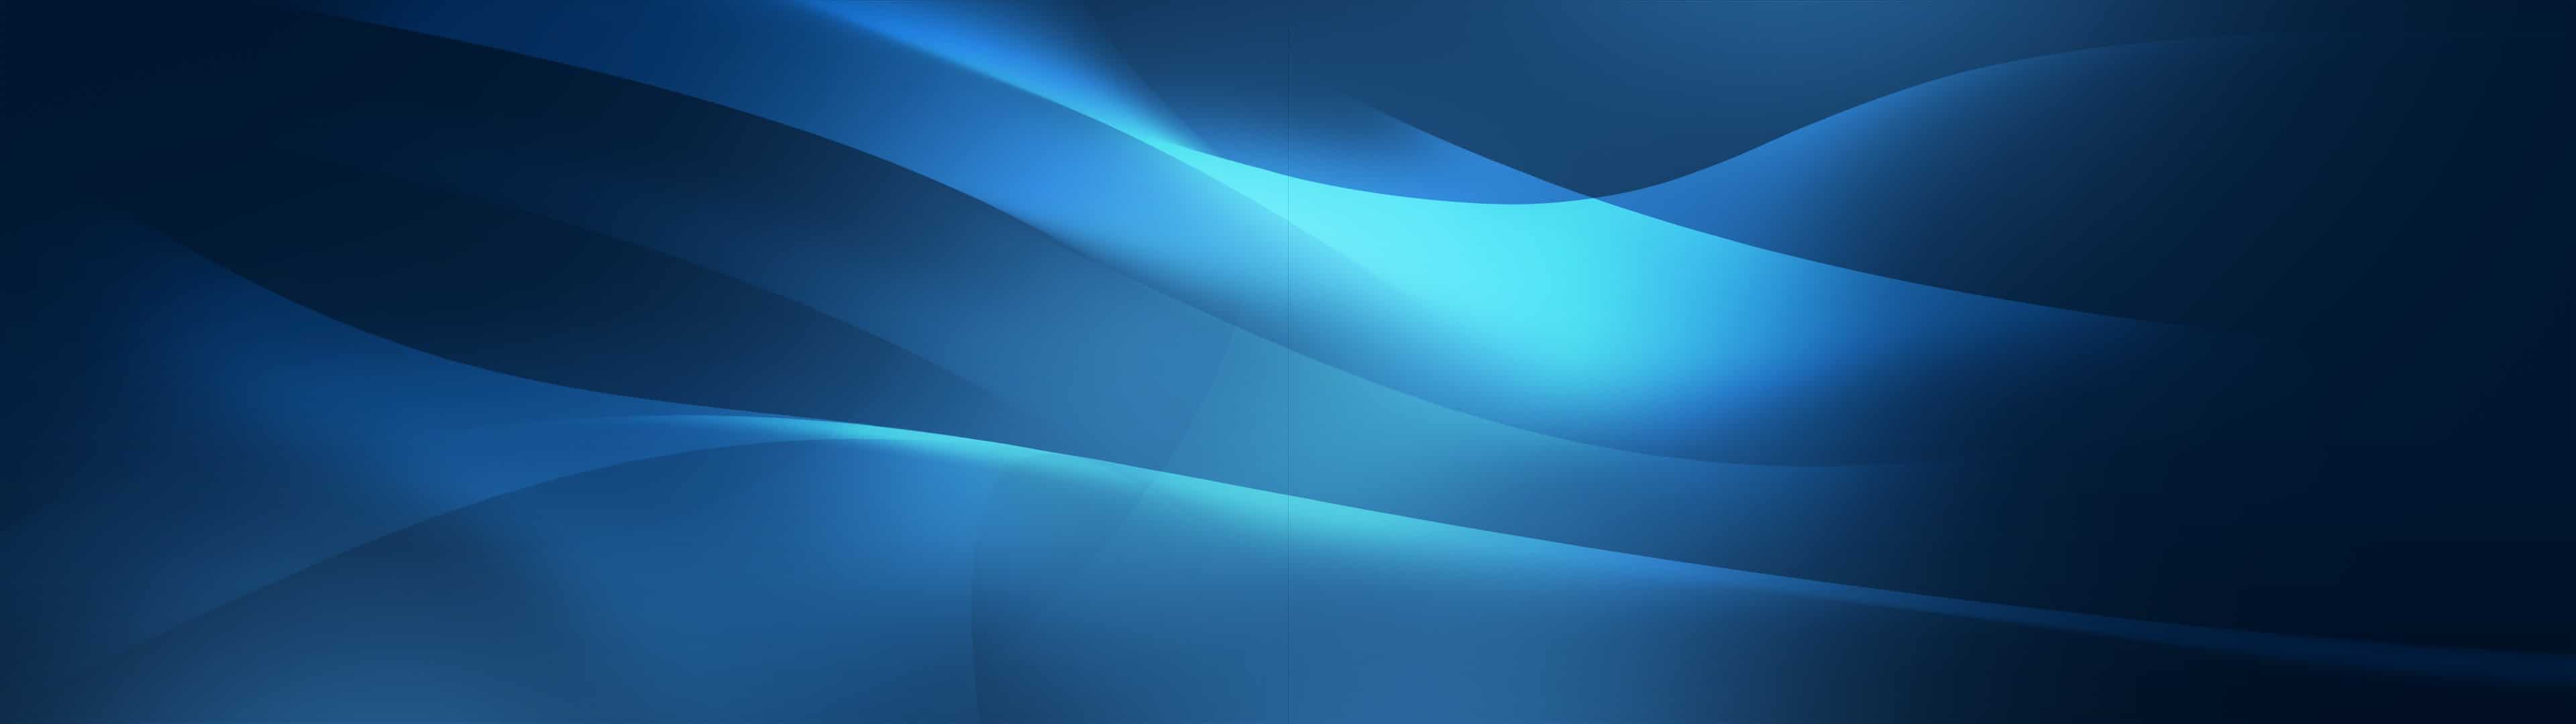 Blue Dual Screen Wallpapers - Top Free Blue Dual Screen Backgrounds